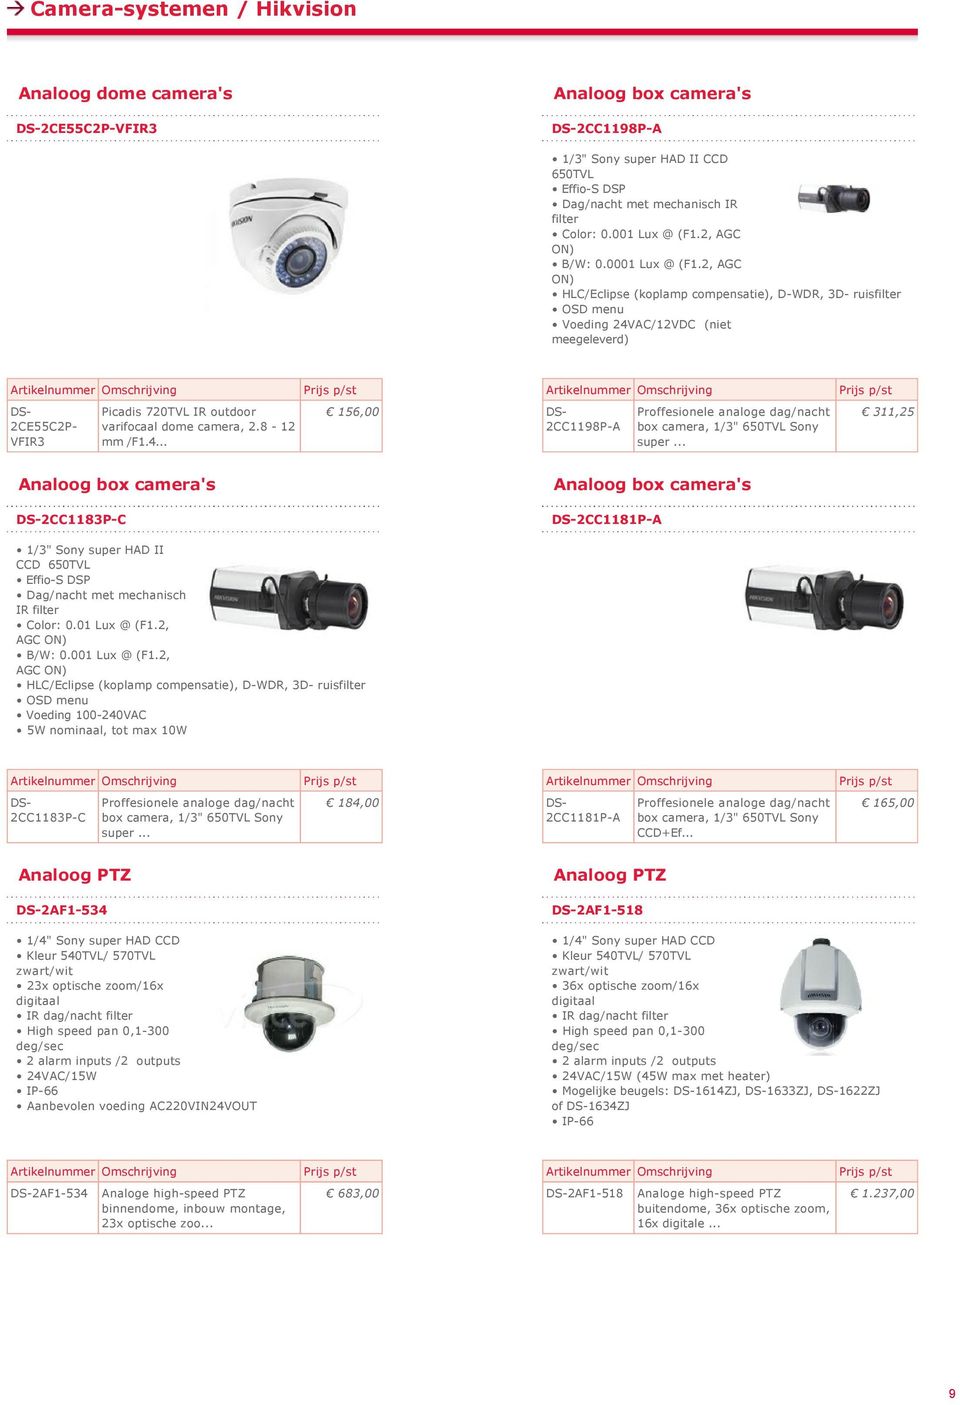 .. 311,25 Analoog box camera's 2CC1183P C 1/3" Sony super HAD II CCD 650TVL Effio S DSP Color: 0.01 Lux @ (F1.2, AGC ON) B/W: 0.001 Lux @ (F1.